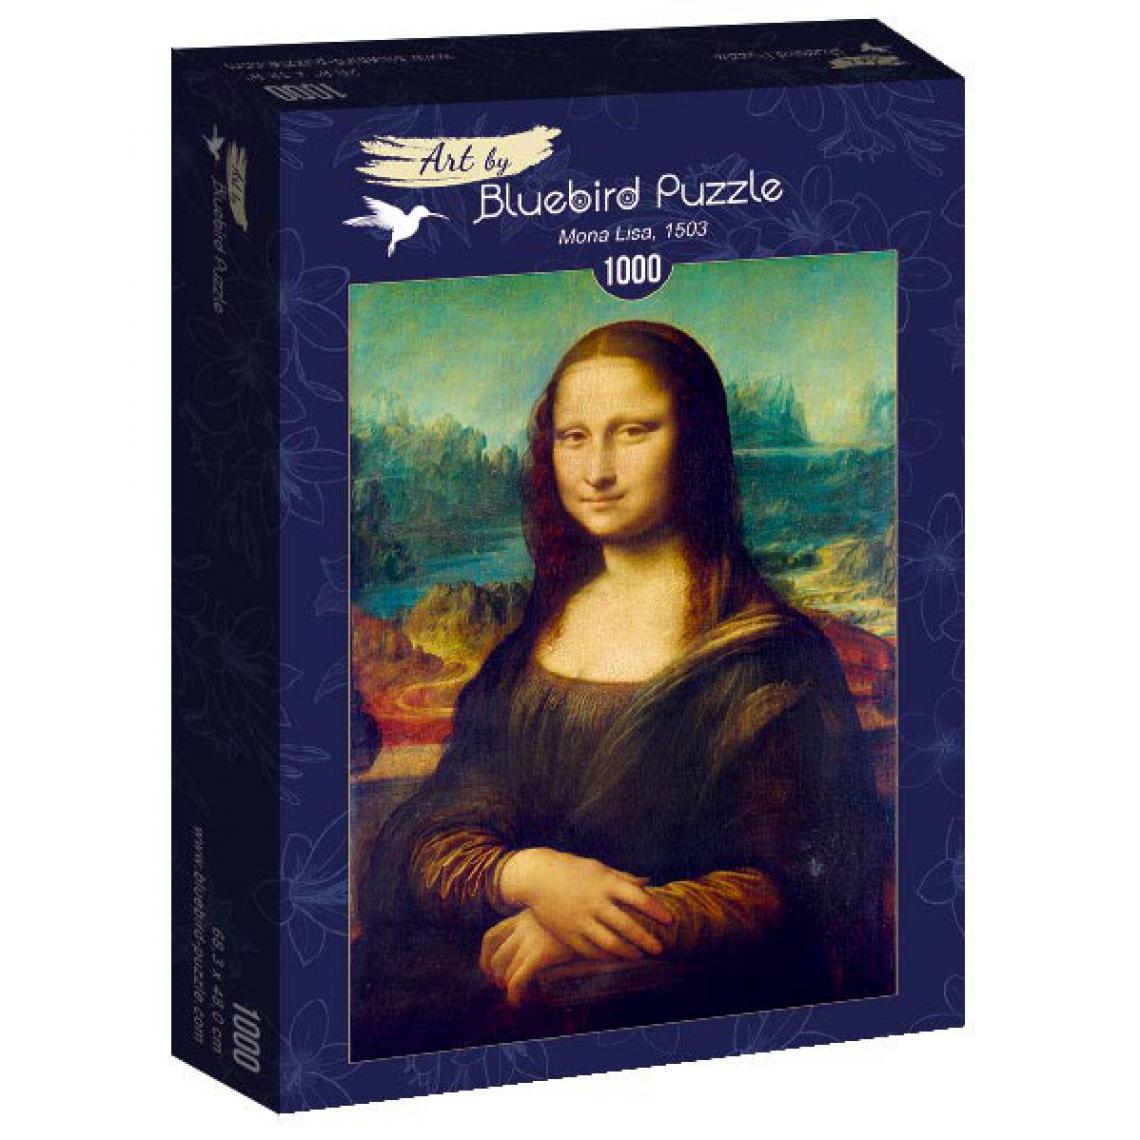 Bluebird - Puzzle Leonardo Da Vinci - Mona Lisa, 1503 - 1000 pieces - Animaux